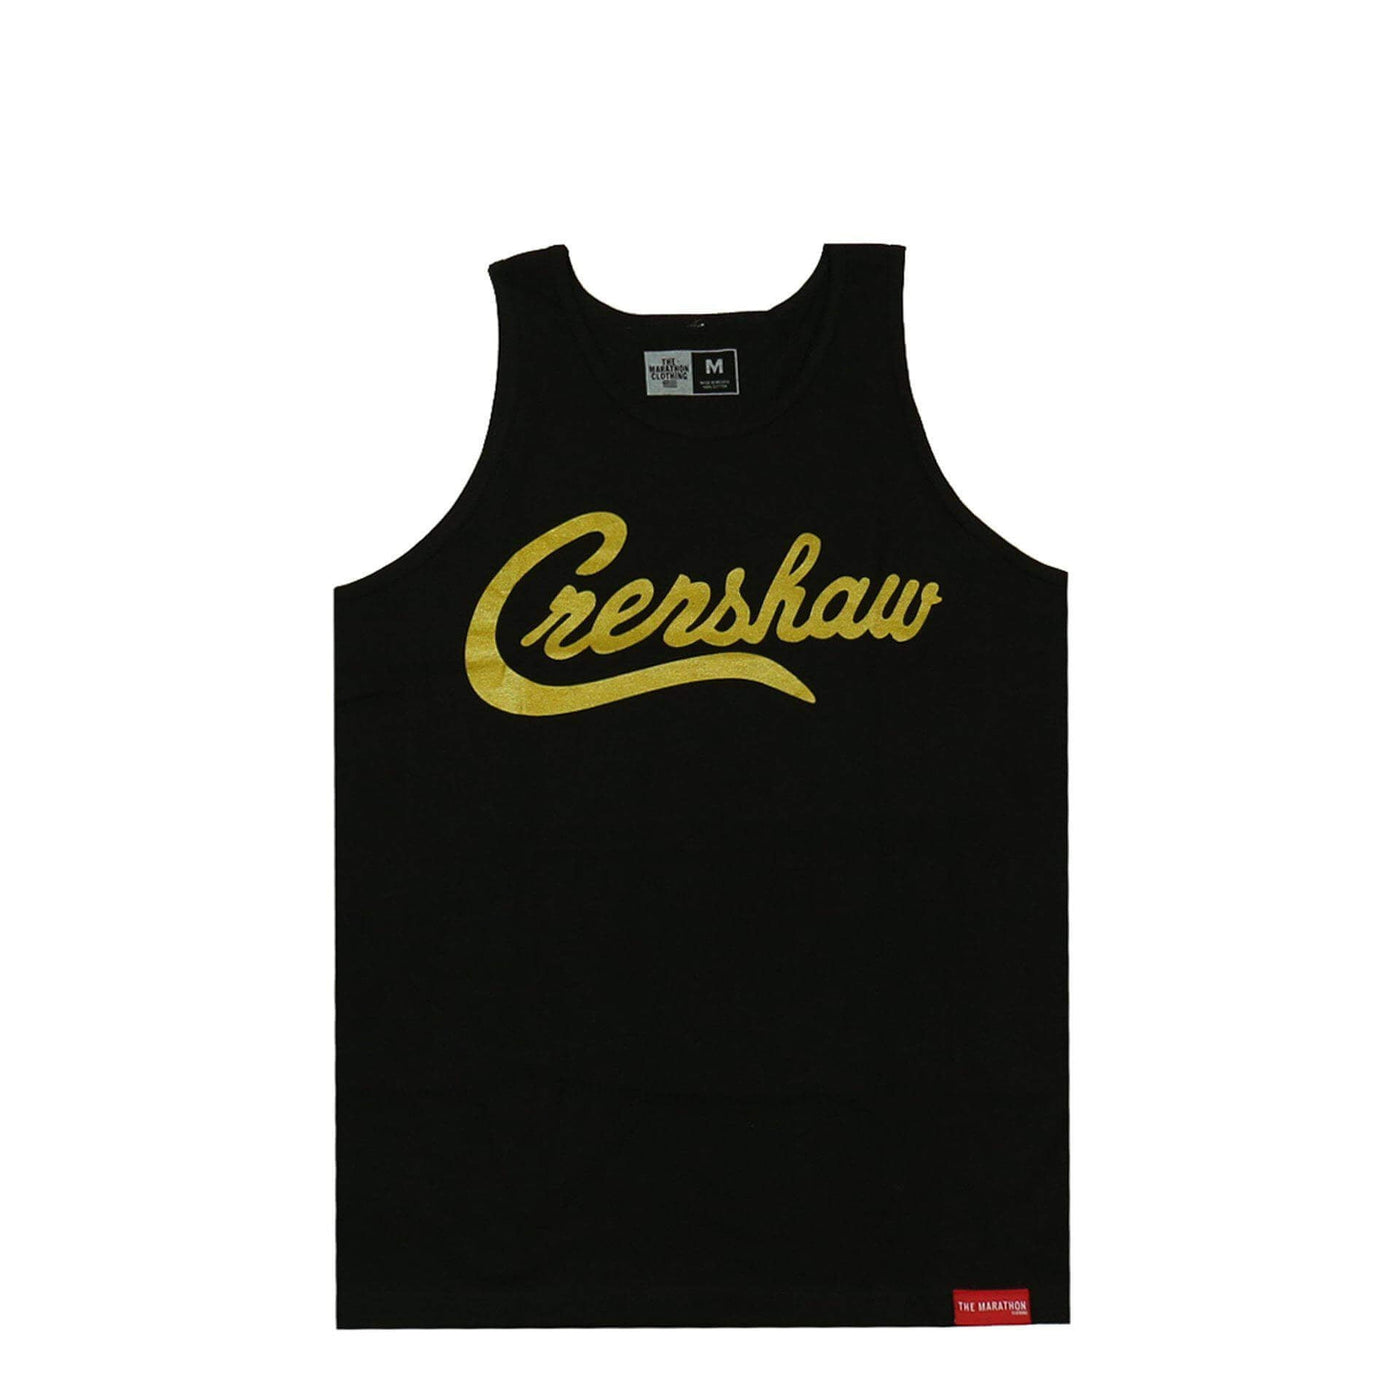 Crenshaw Tank Top - Black/Gold-The Marathon Clothing